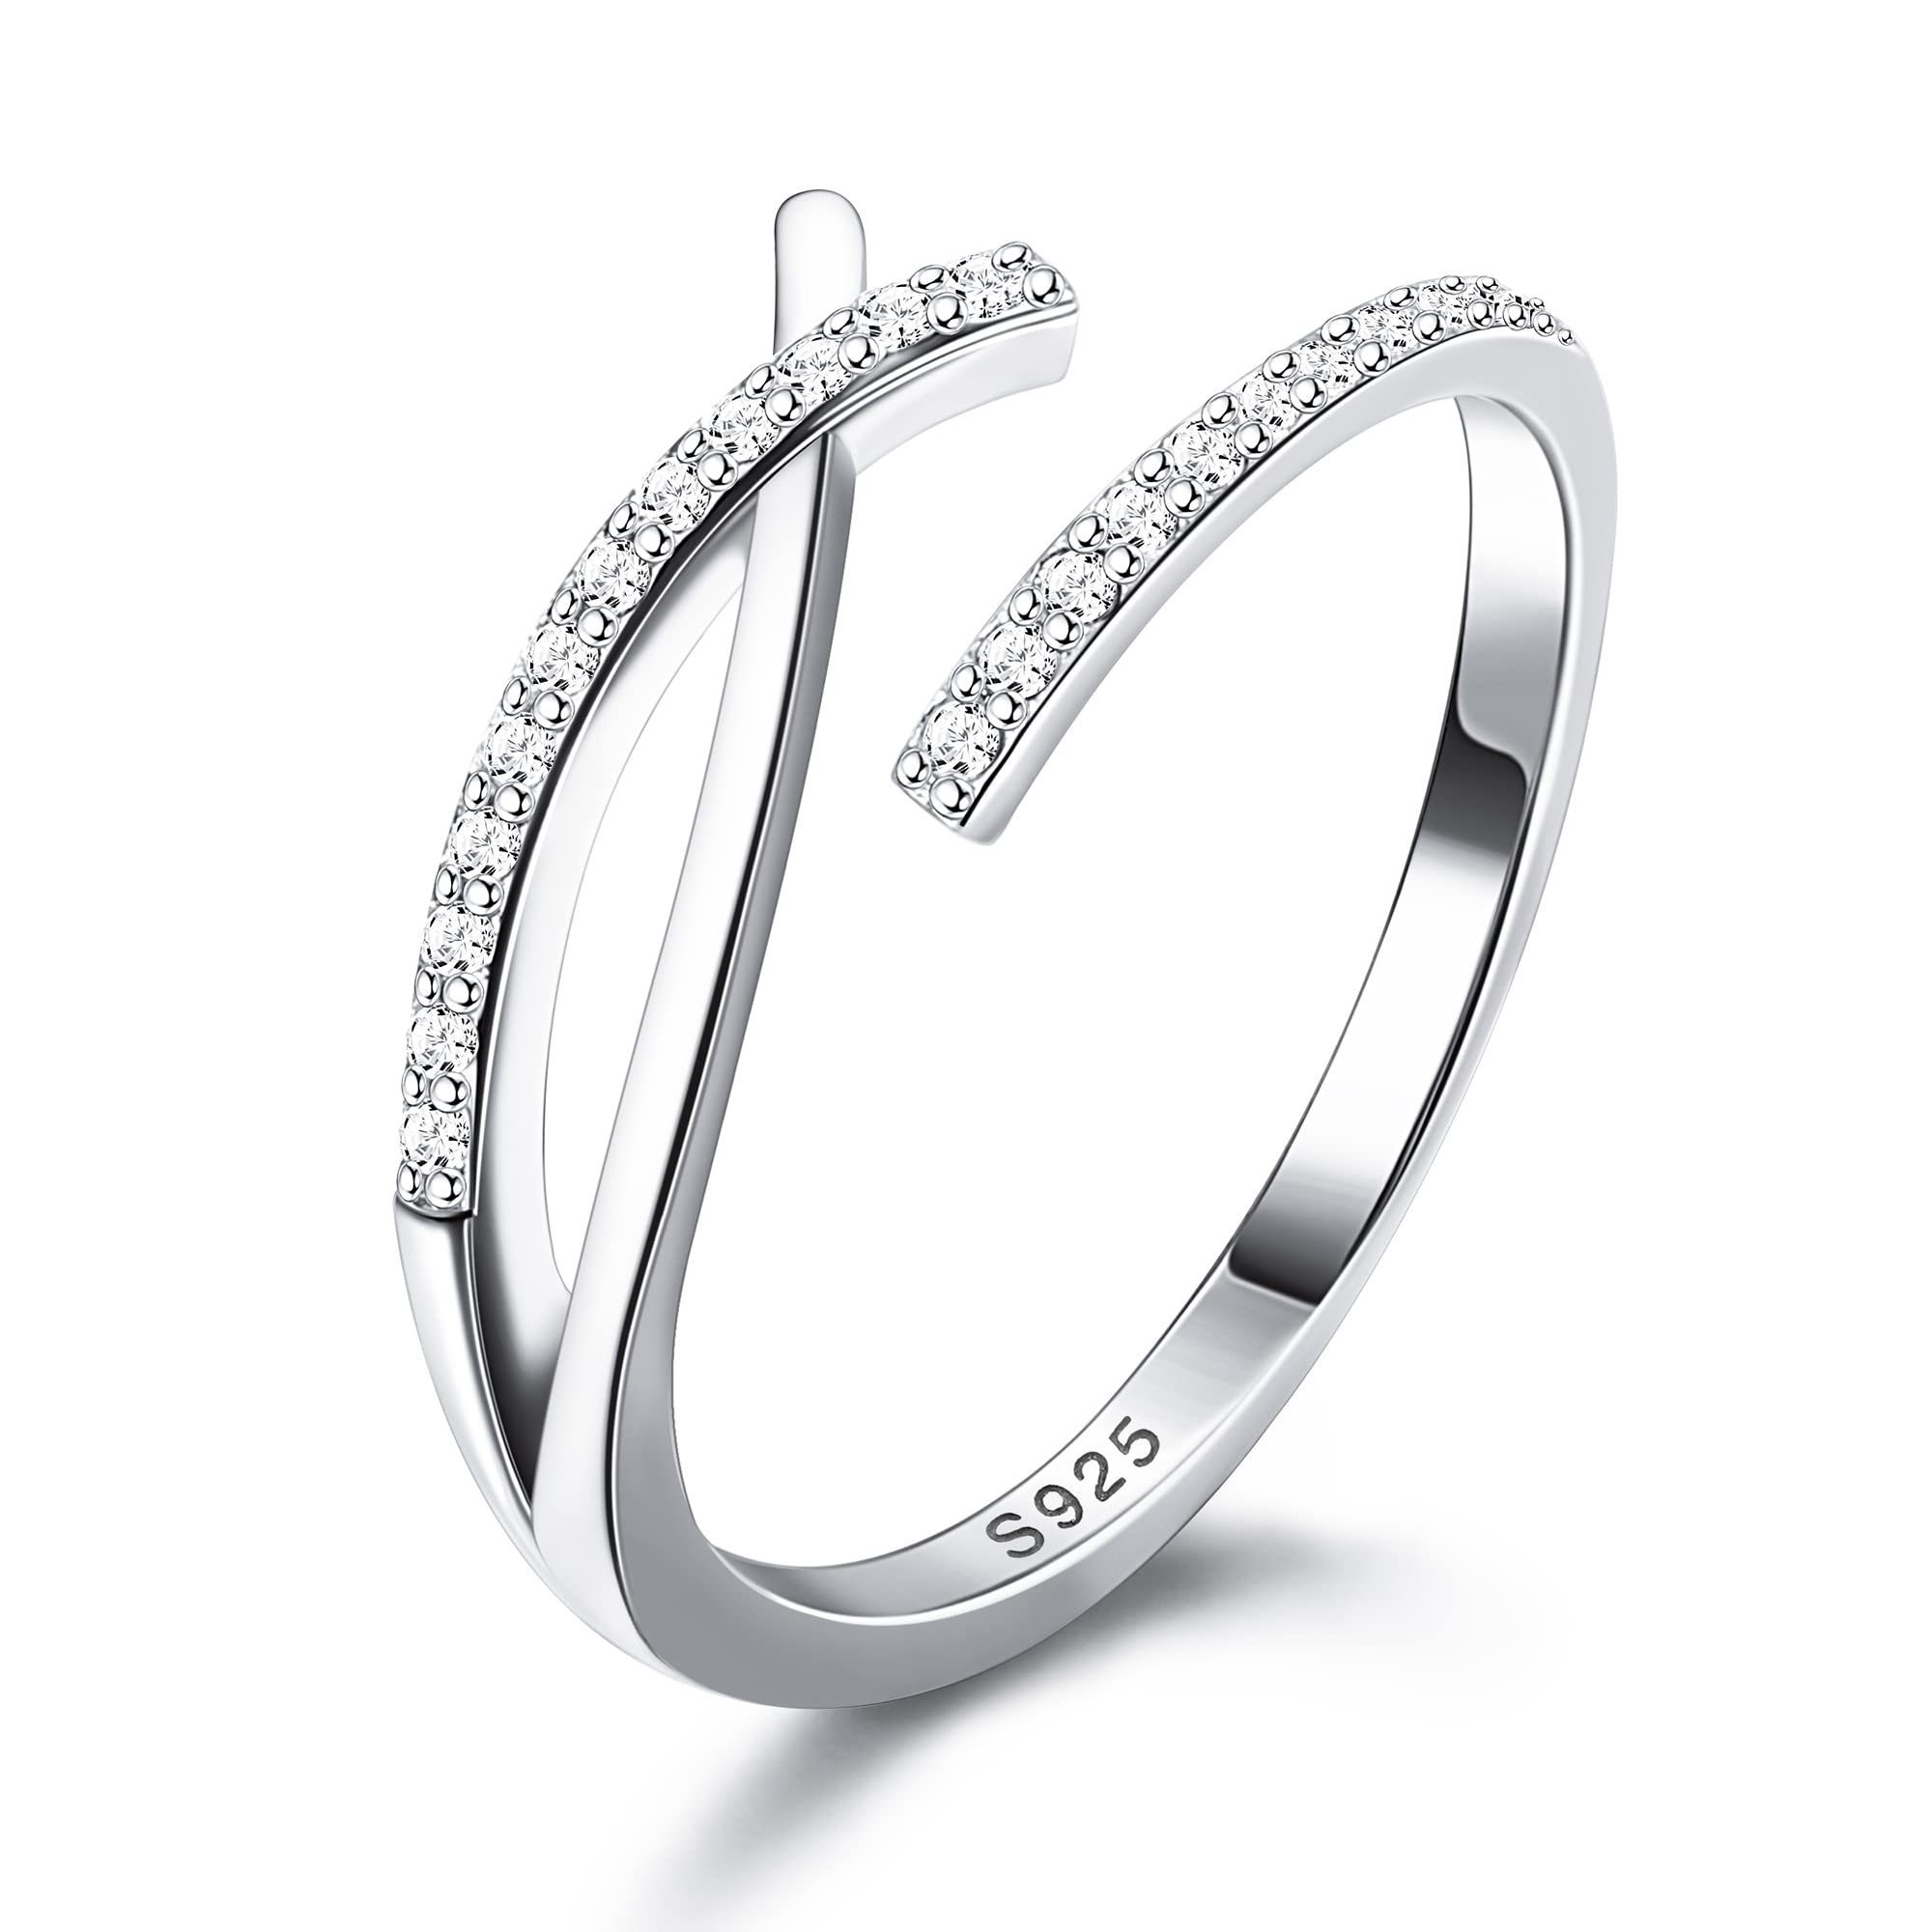 POCHUMIDUU Fingerring S925 Silber Damen Eröffnung Mode personalisierte Silber Ring, Silberschmuck für Frauen aus 925er Sterlingsilber